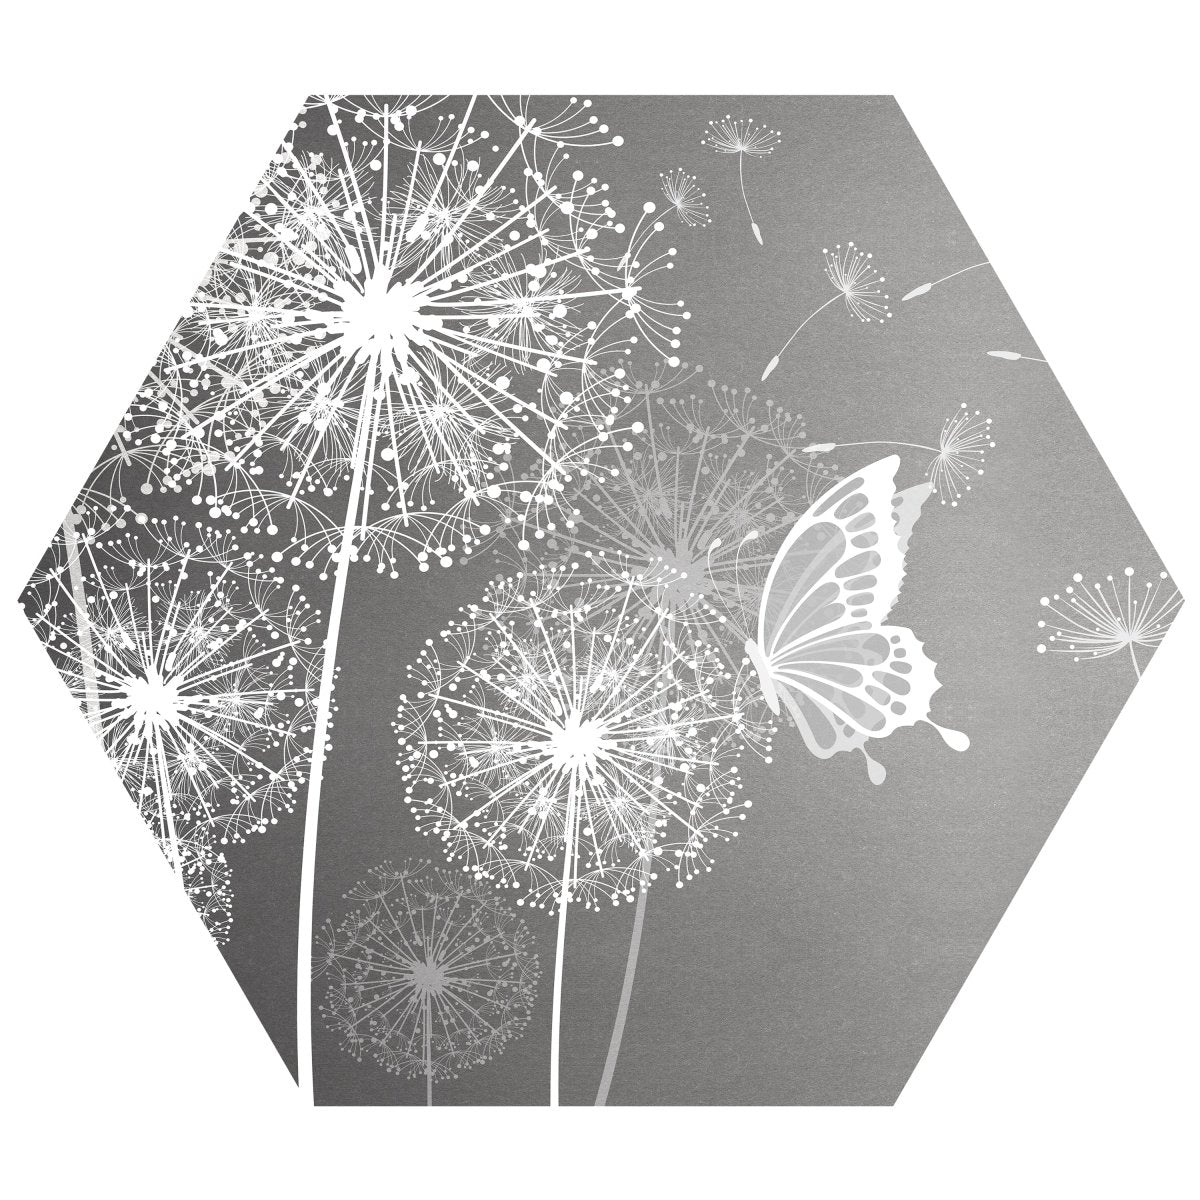 Hexagon-Fototapete Pusteblumen mit Schmetterlingen M0029 - Bild 11